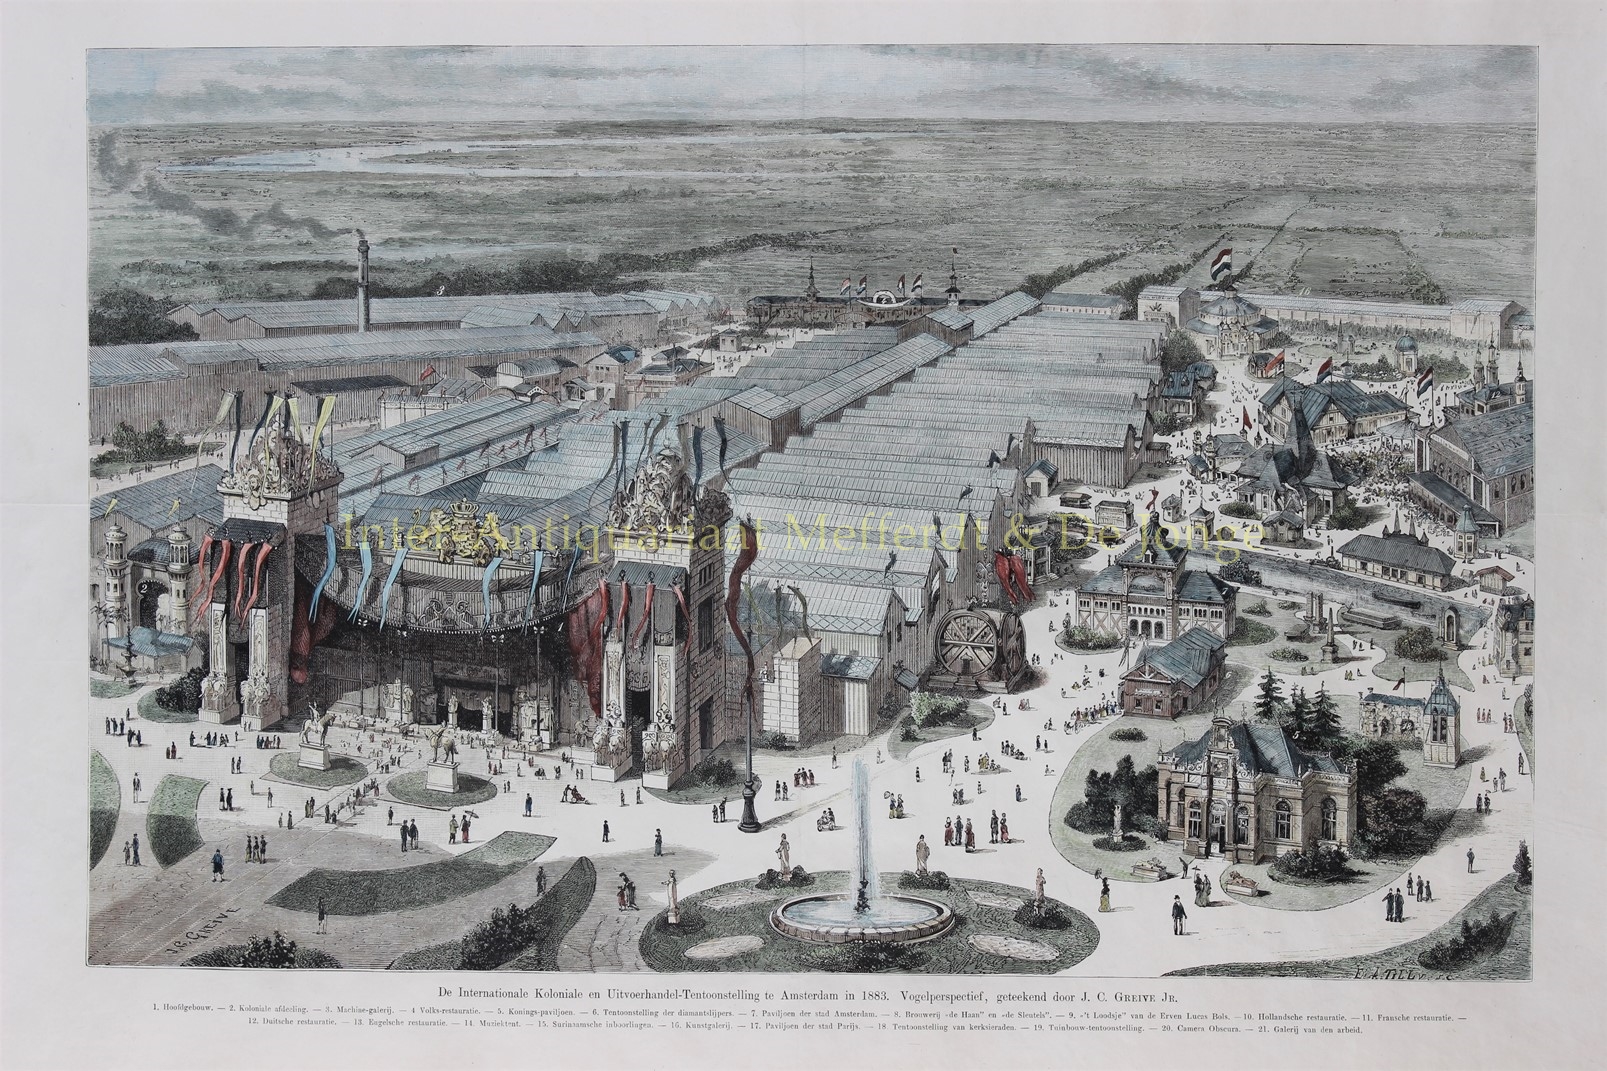  - Amsterdam, world exhibition - J.C. Greive, 1883